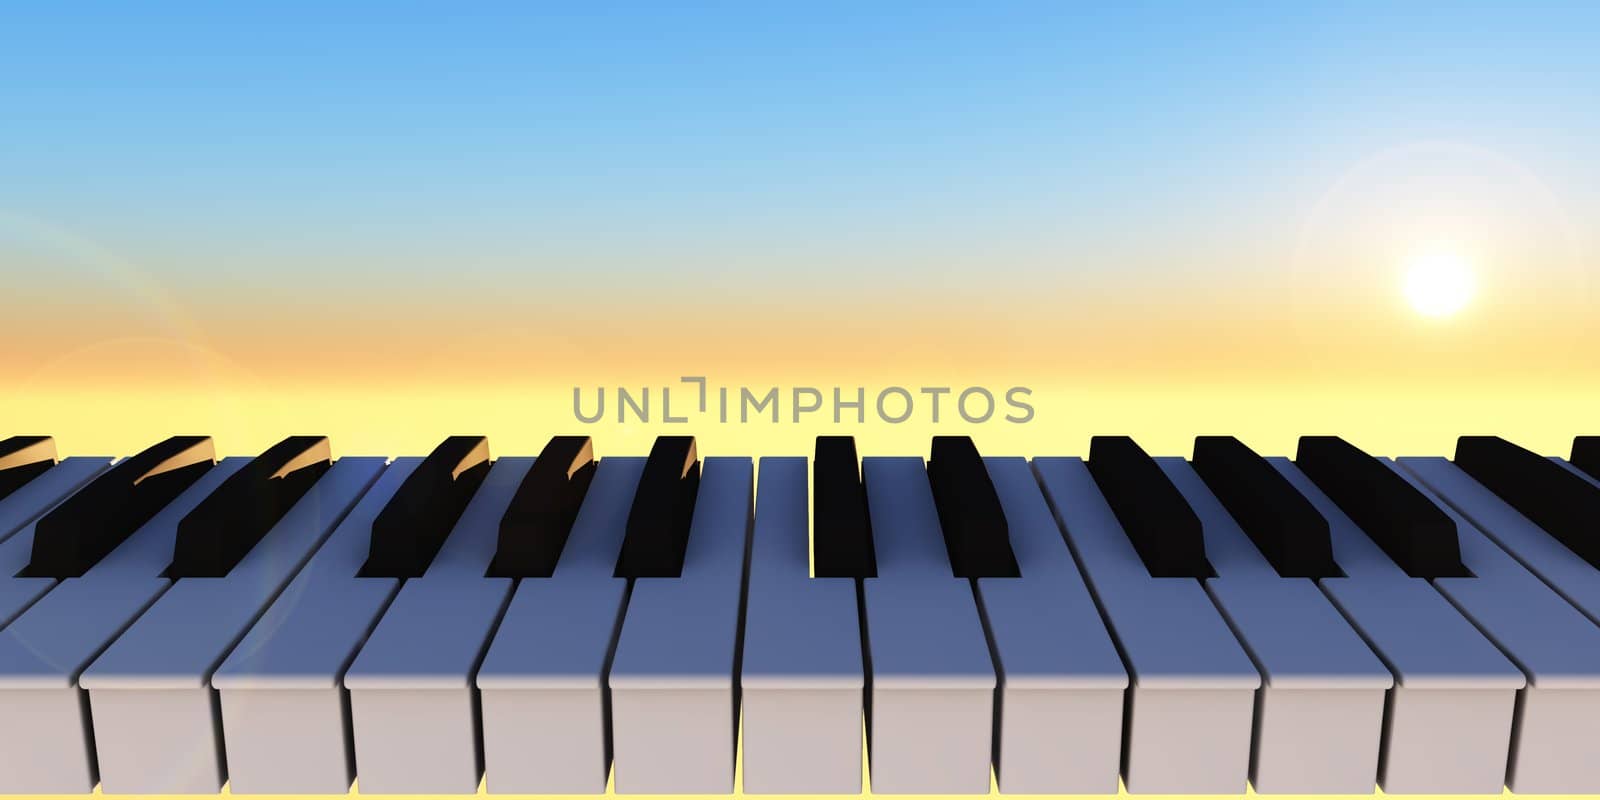 piano keyboard and sunny sky - 3d illustration